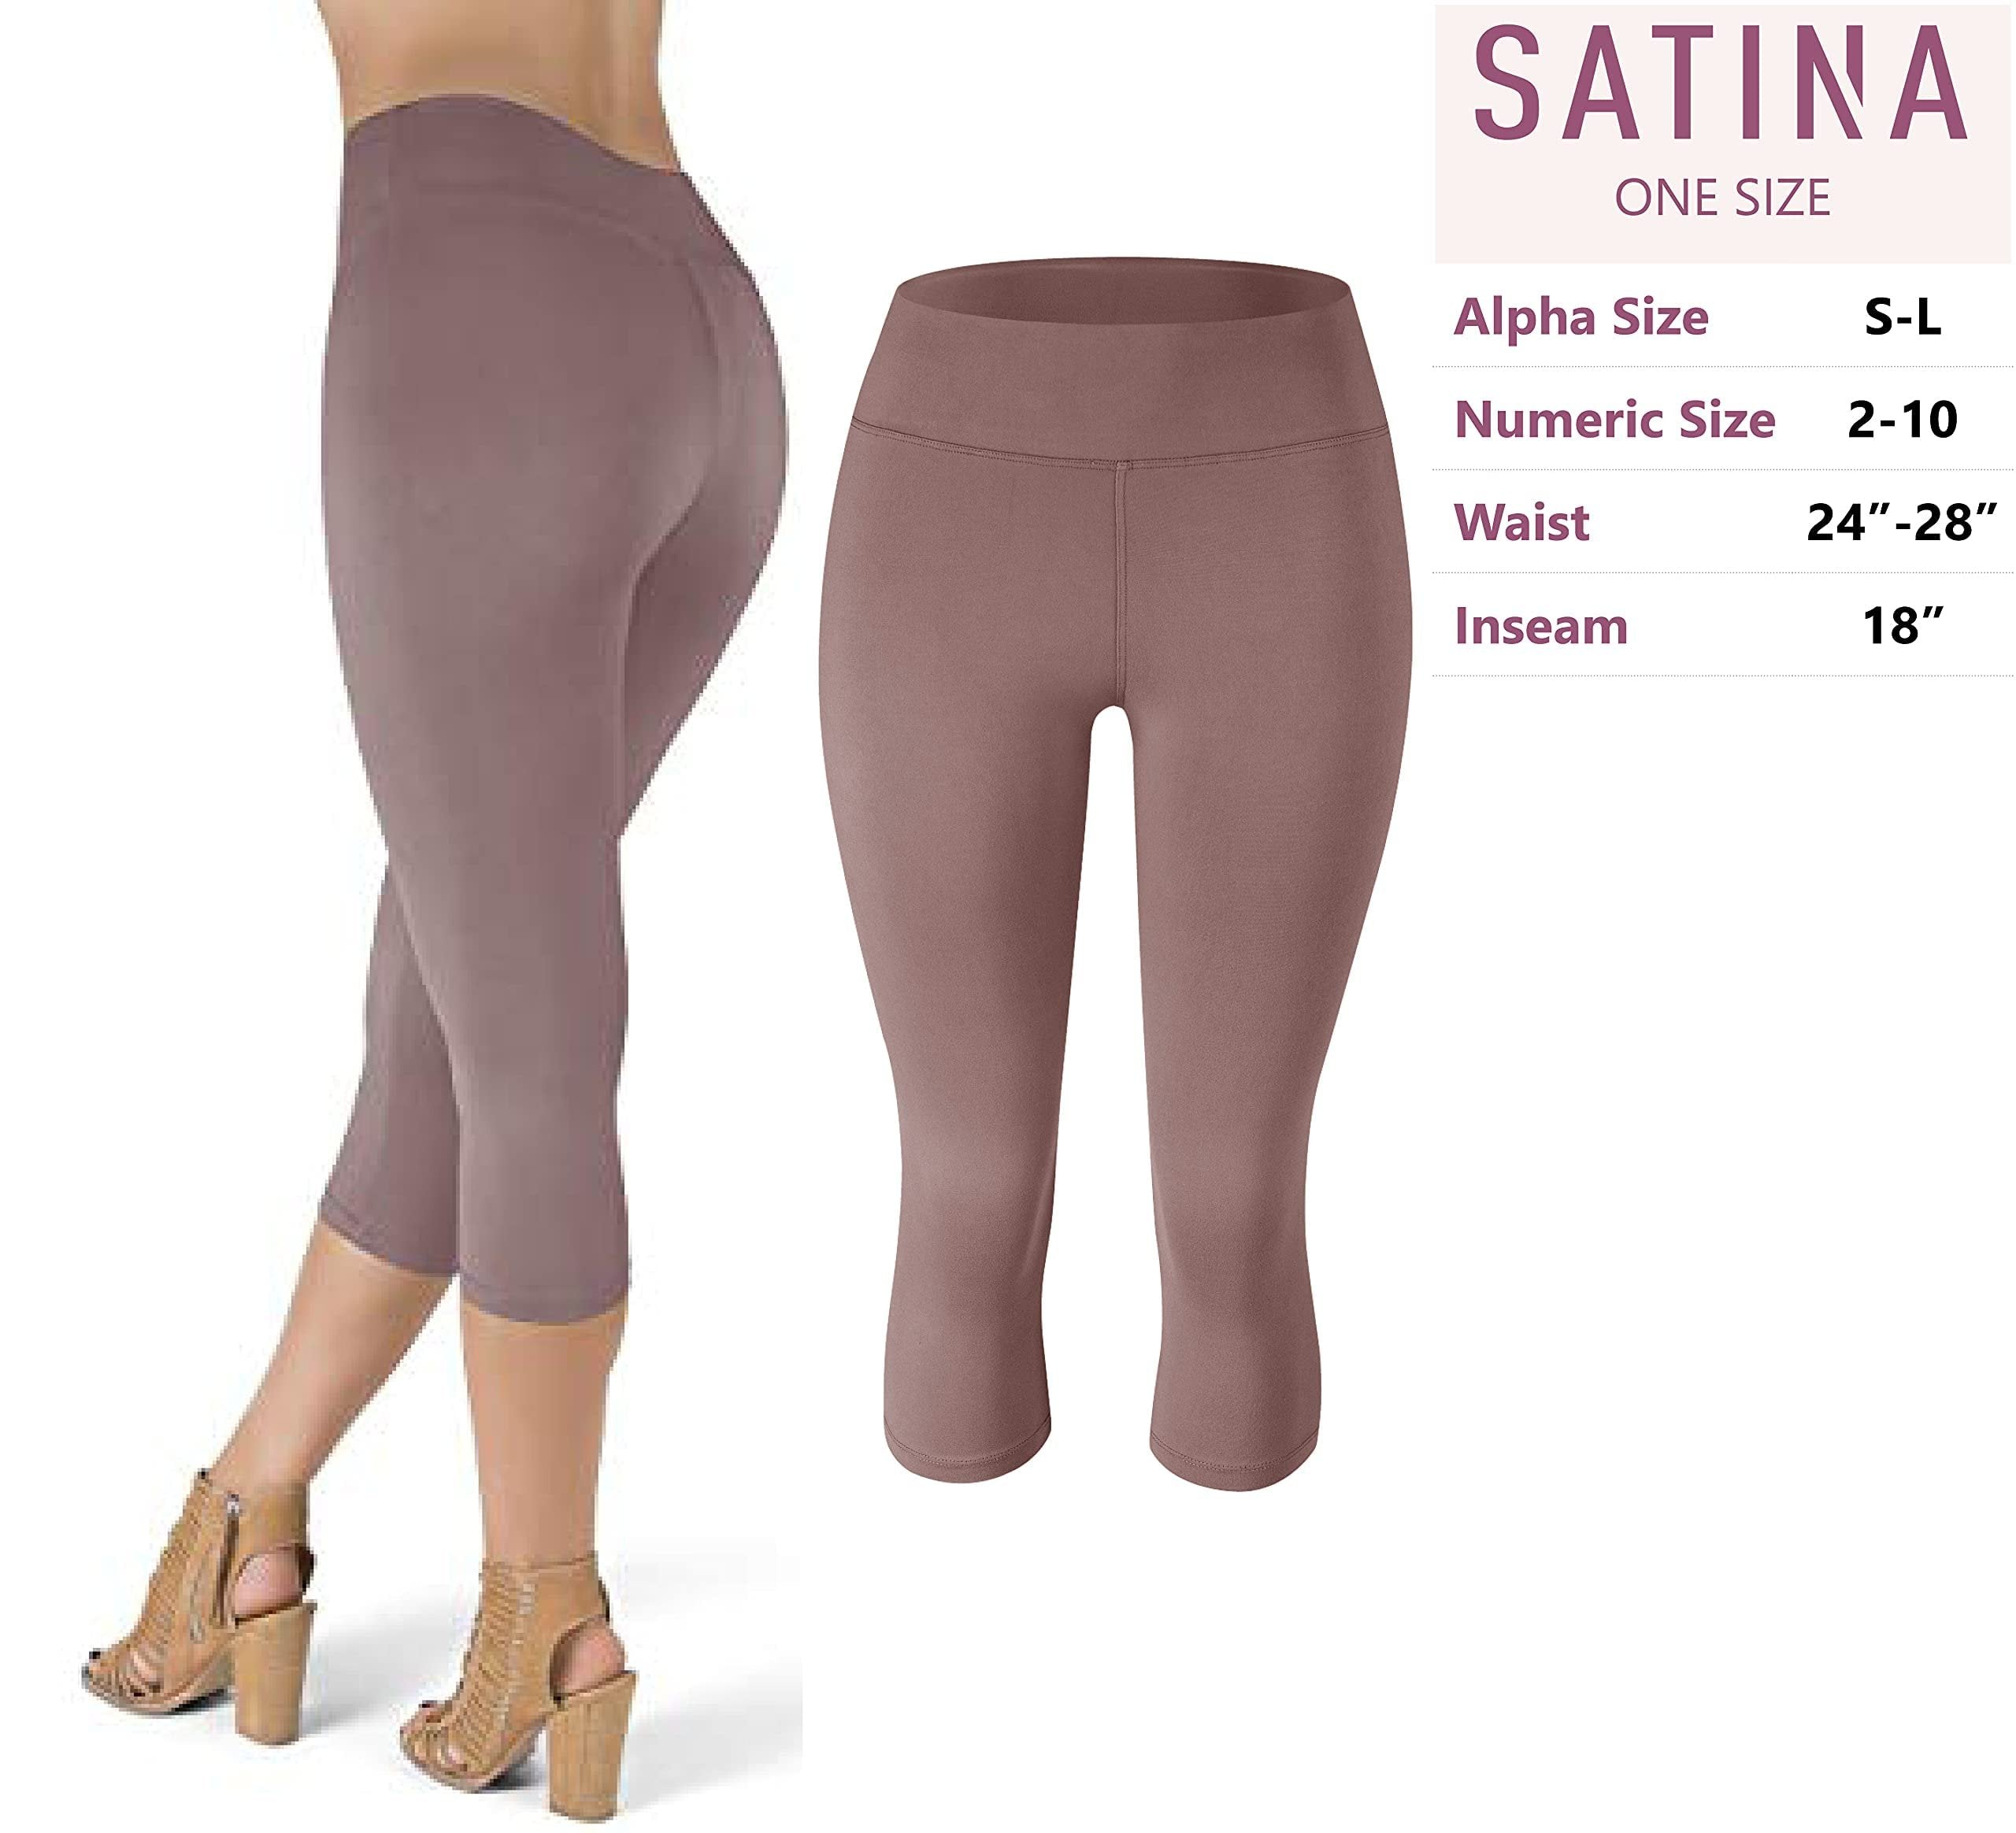 SATINA High Waisted Capri Leggings for Women - Capri Leggings for Women - High Waist for Tummy Control - Mauve Capri Leggings for |3 Inch Waistband (Plus Size, Mauve)